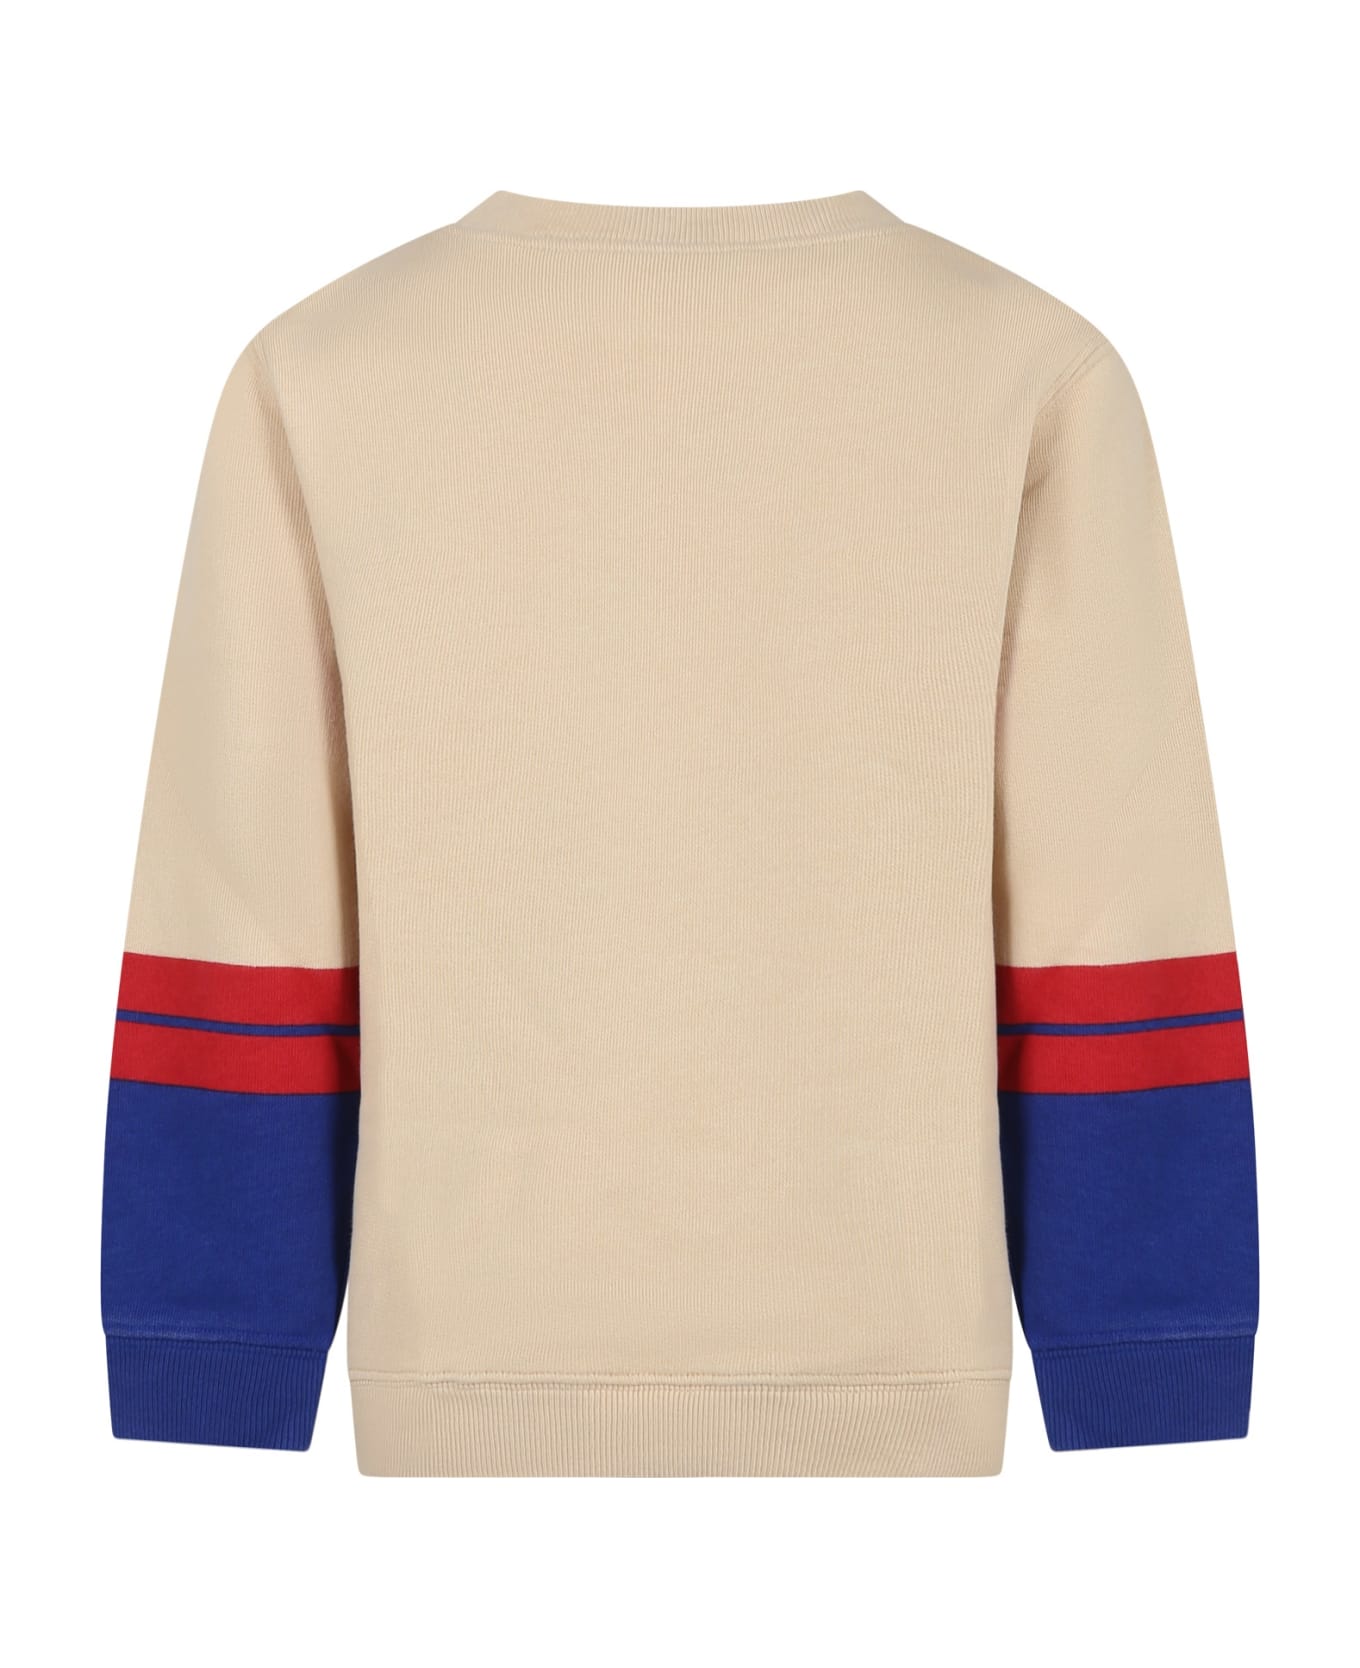 Gucci Ivory Sweatshirt For Boy With Logo - Ivory